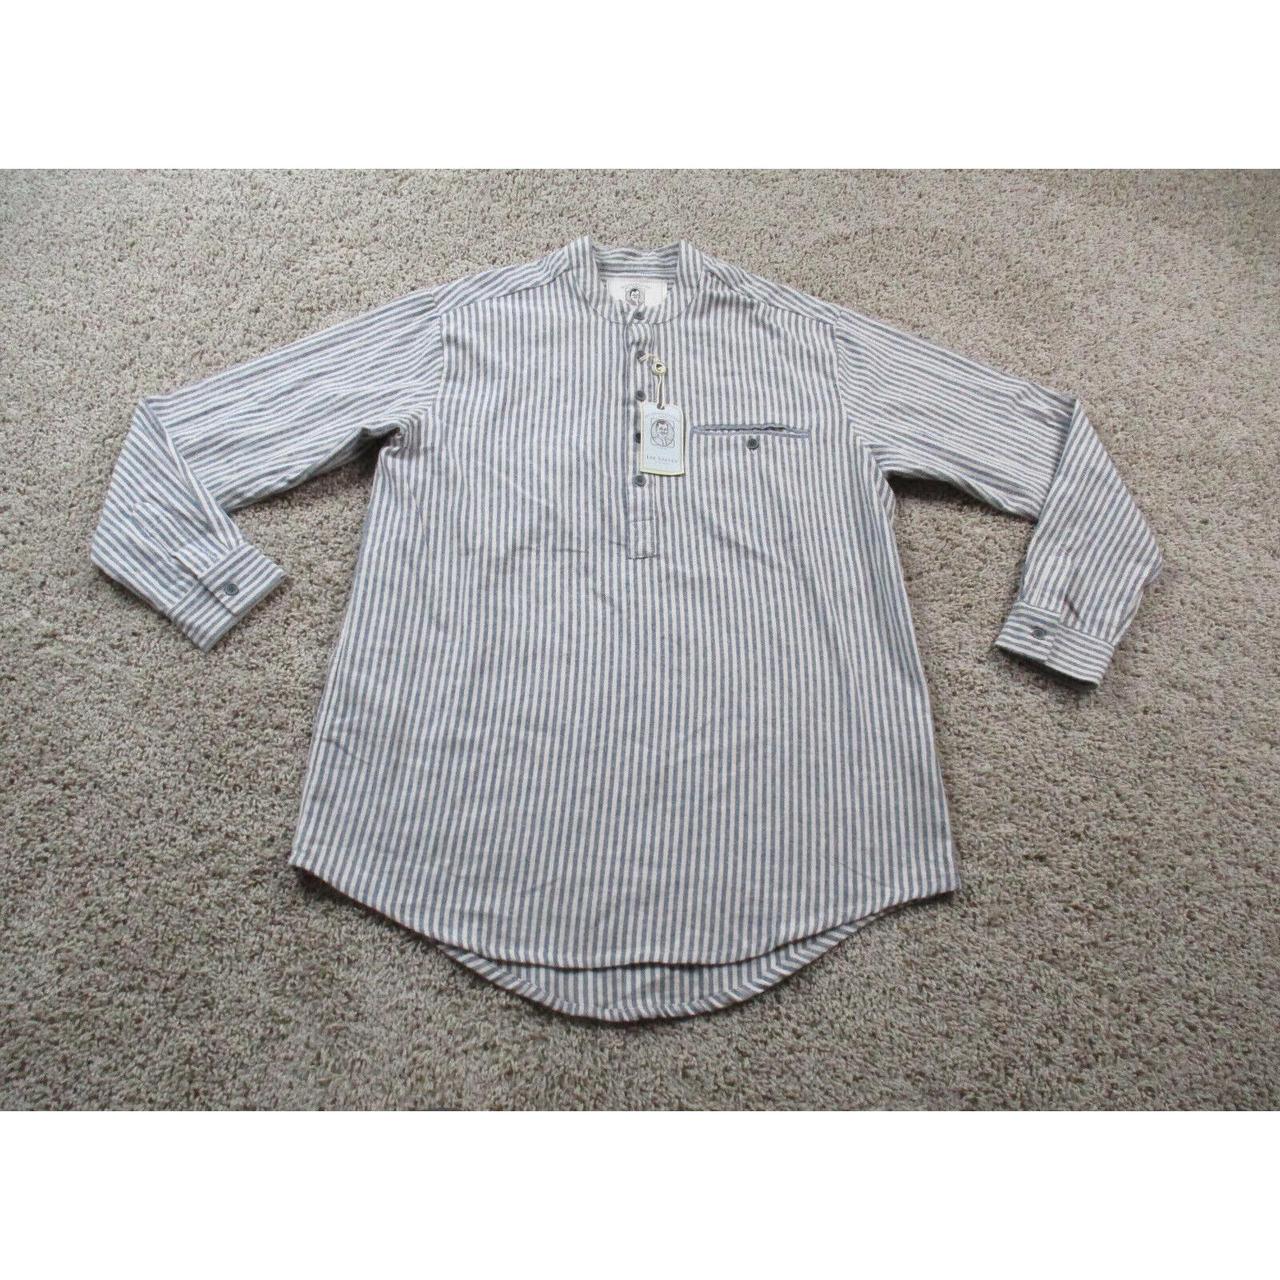 Lee Valley Men's Flannel Grandfather Shirt - Dark Blue and Cream Stripe (LVC)